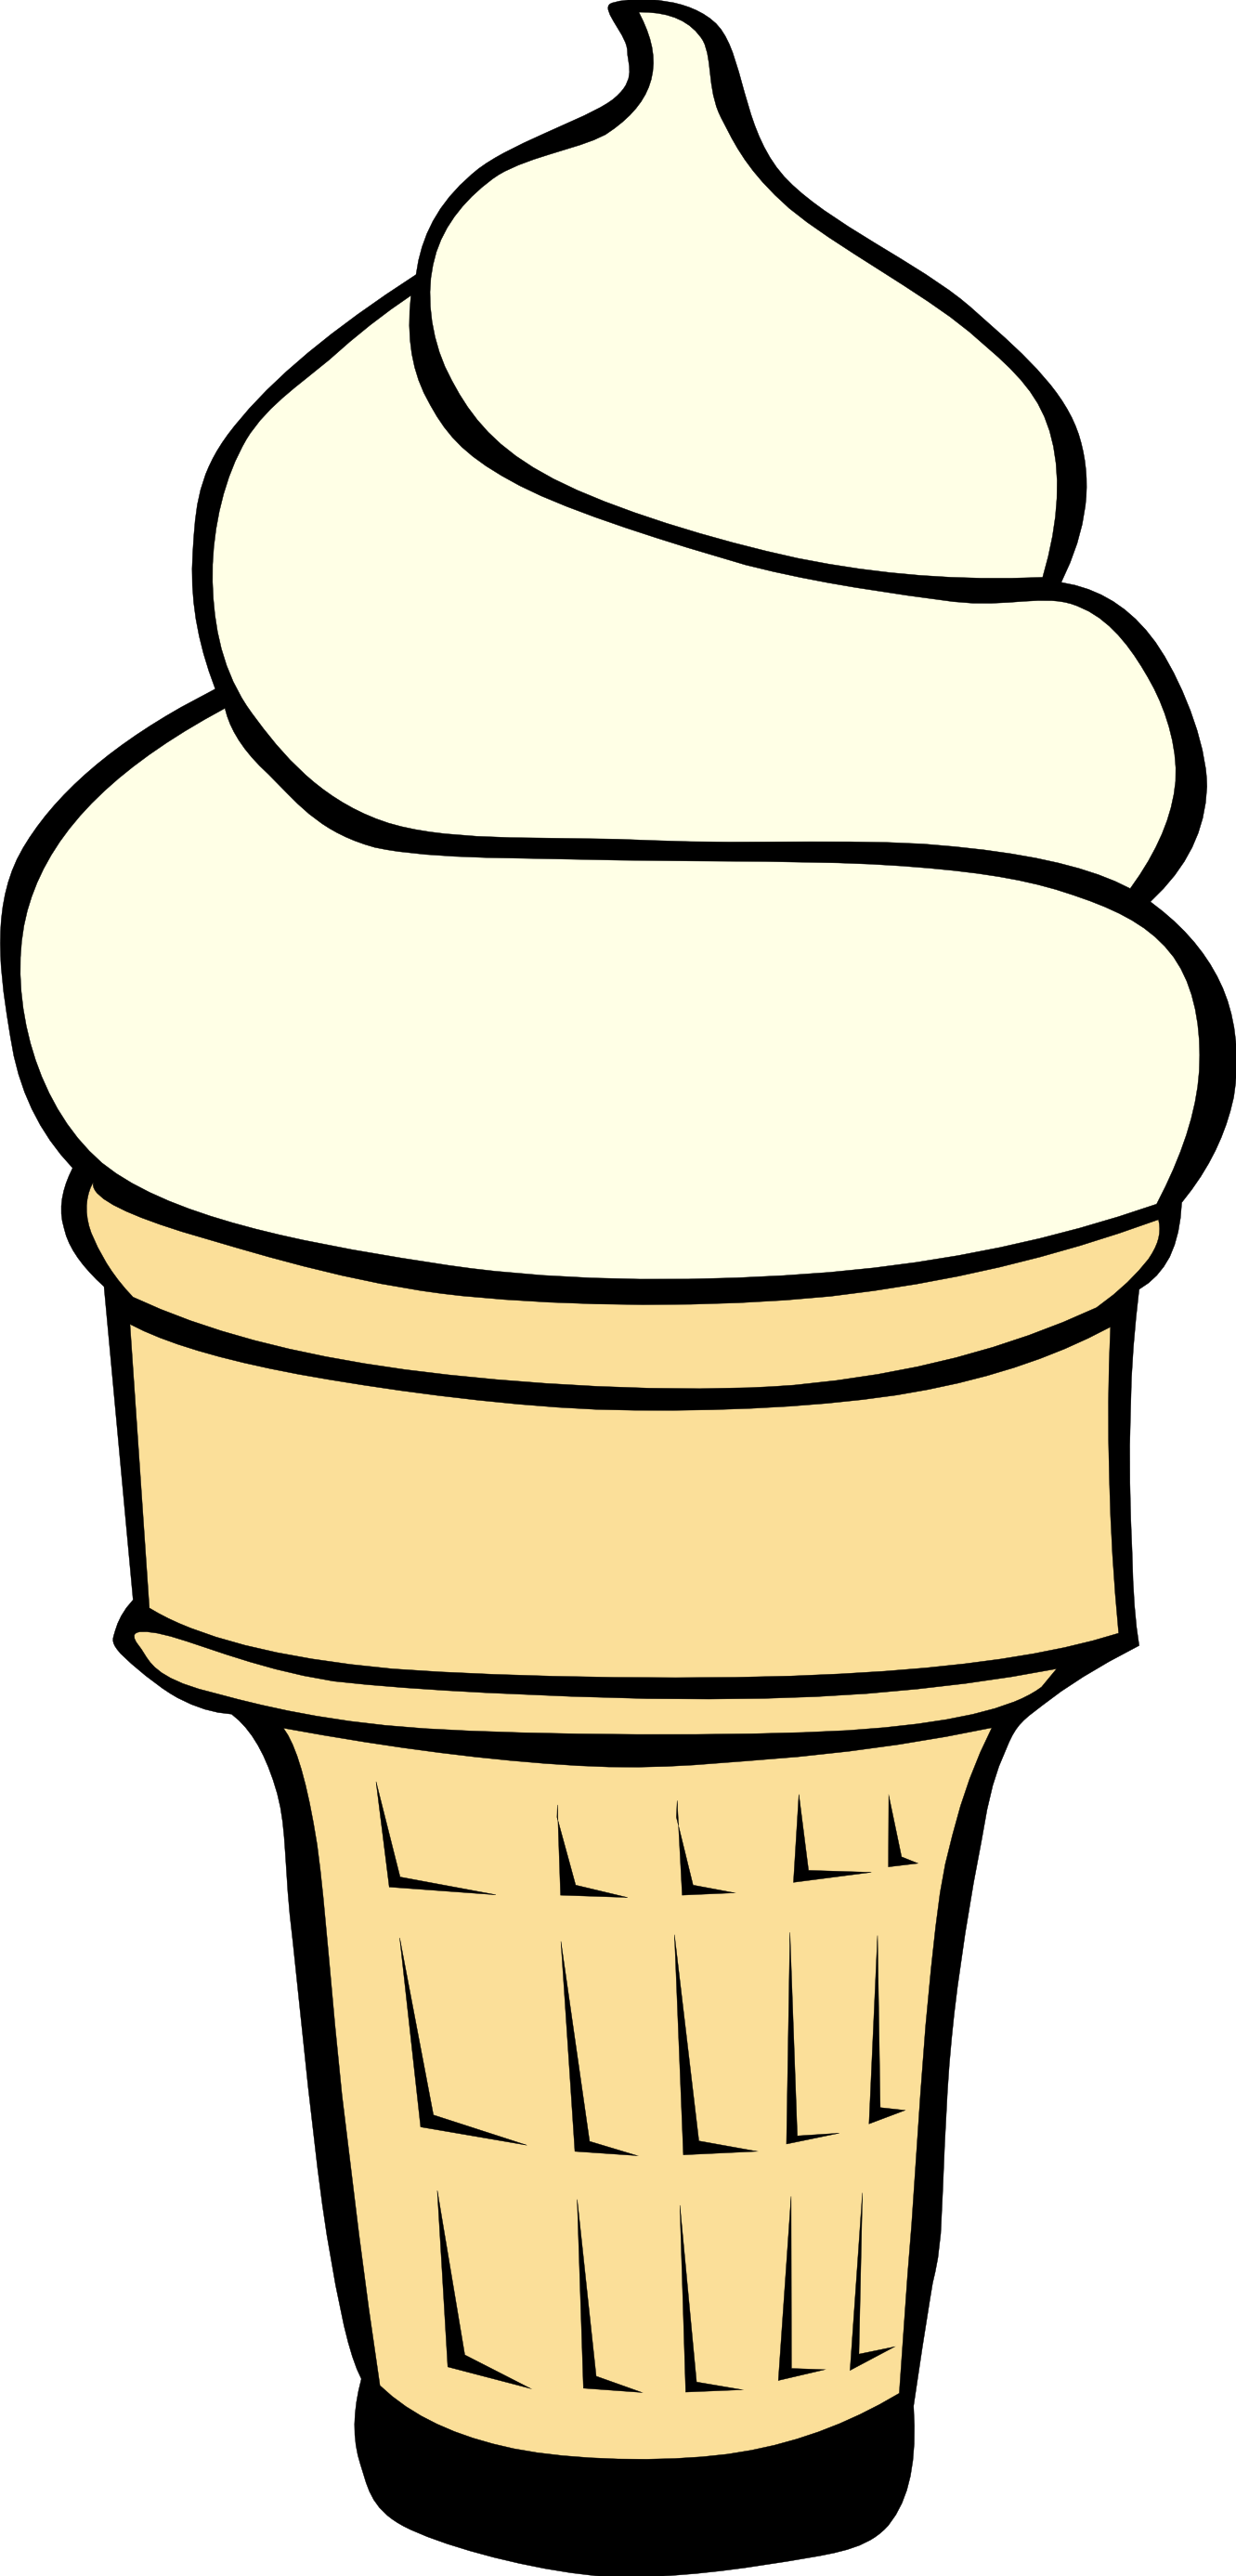 ice cream flavors clipart - photo #18